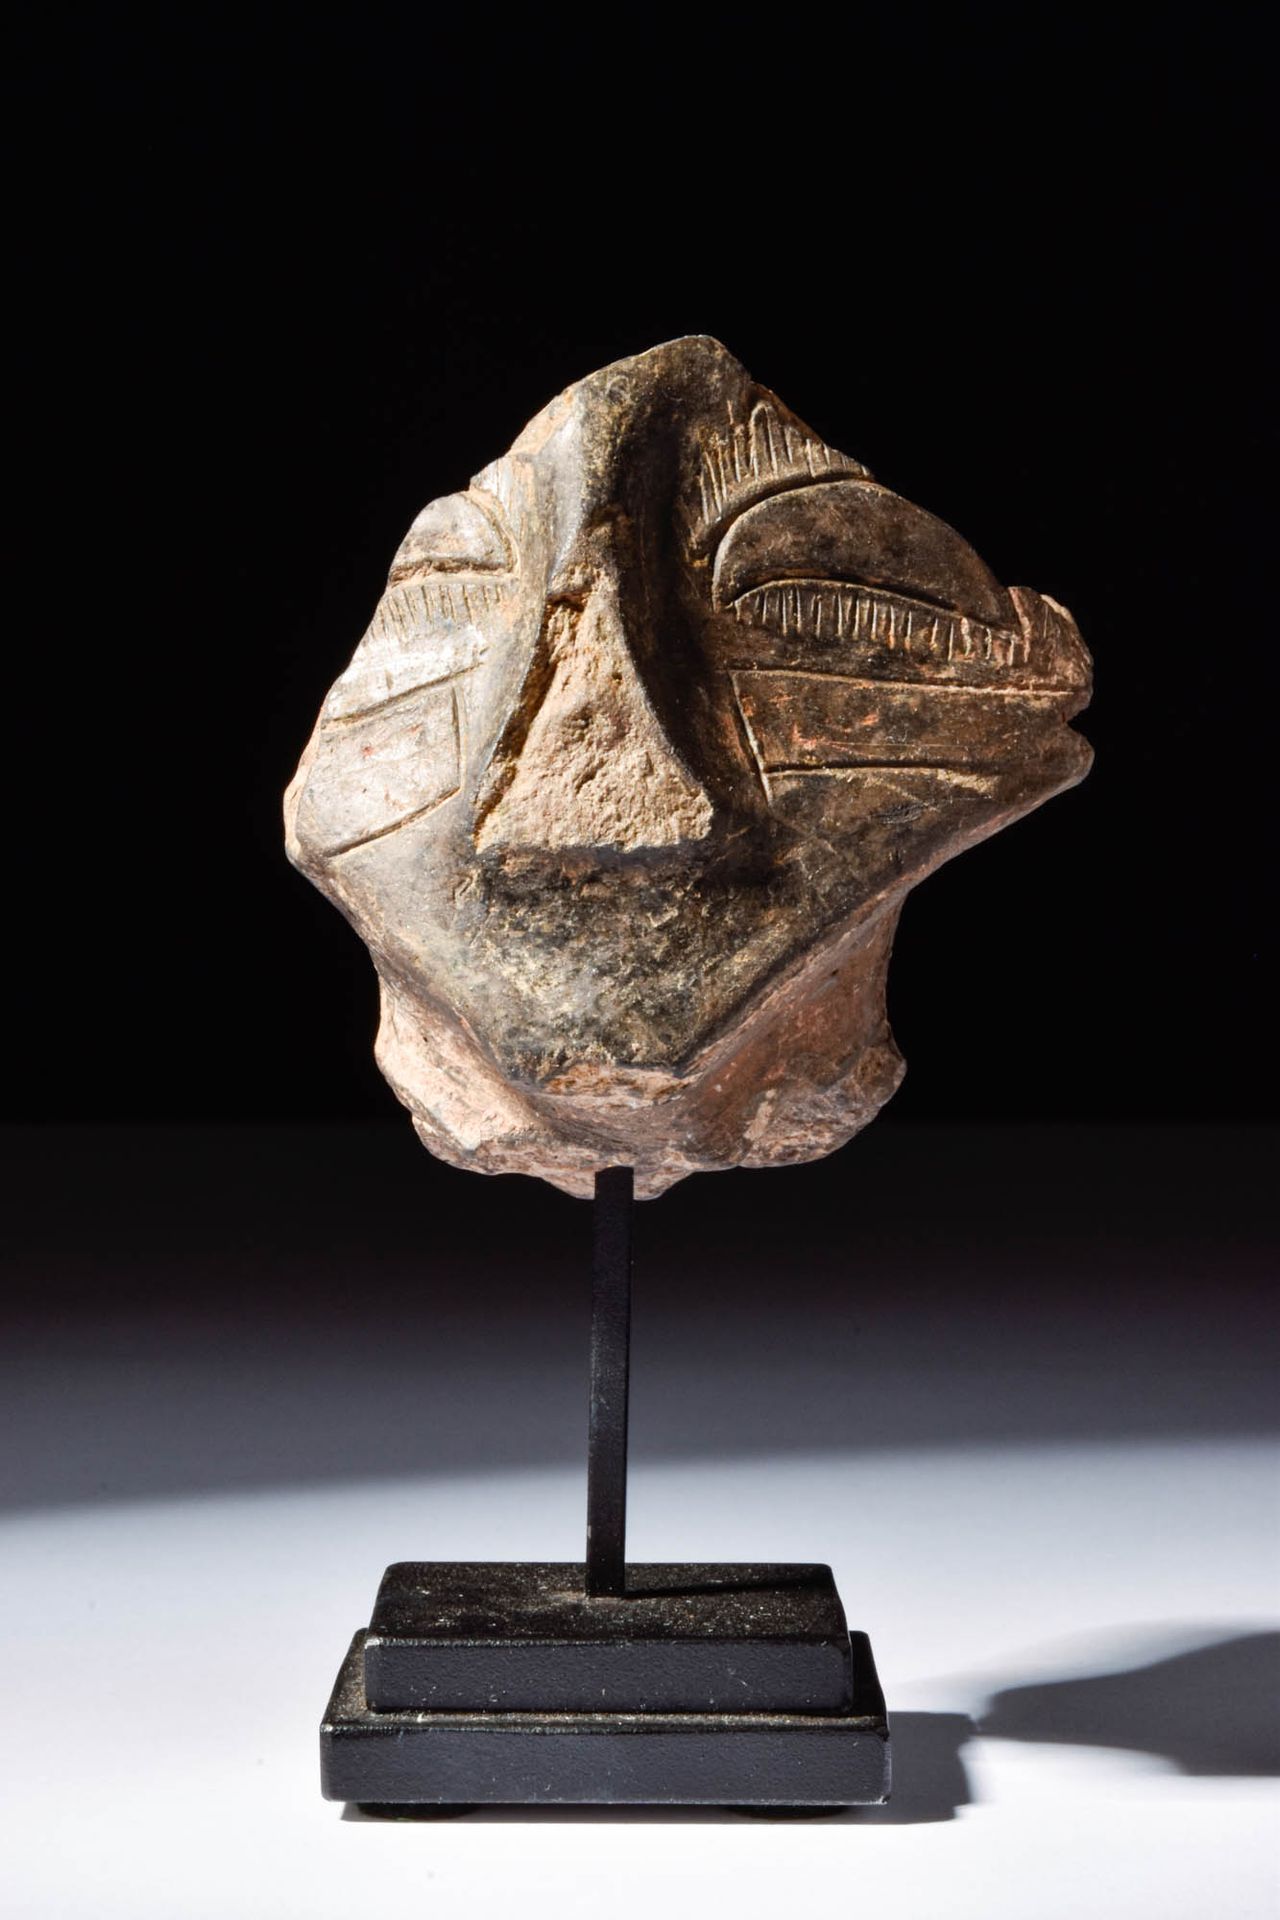 VINCA TERRACOTTA HEAD OF IDOL 约公元前 4000 - 3000 年。公元前 4000 年至 3000 年。
这是一个令人惊叹的长颈&hellip;